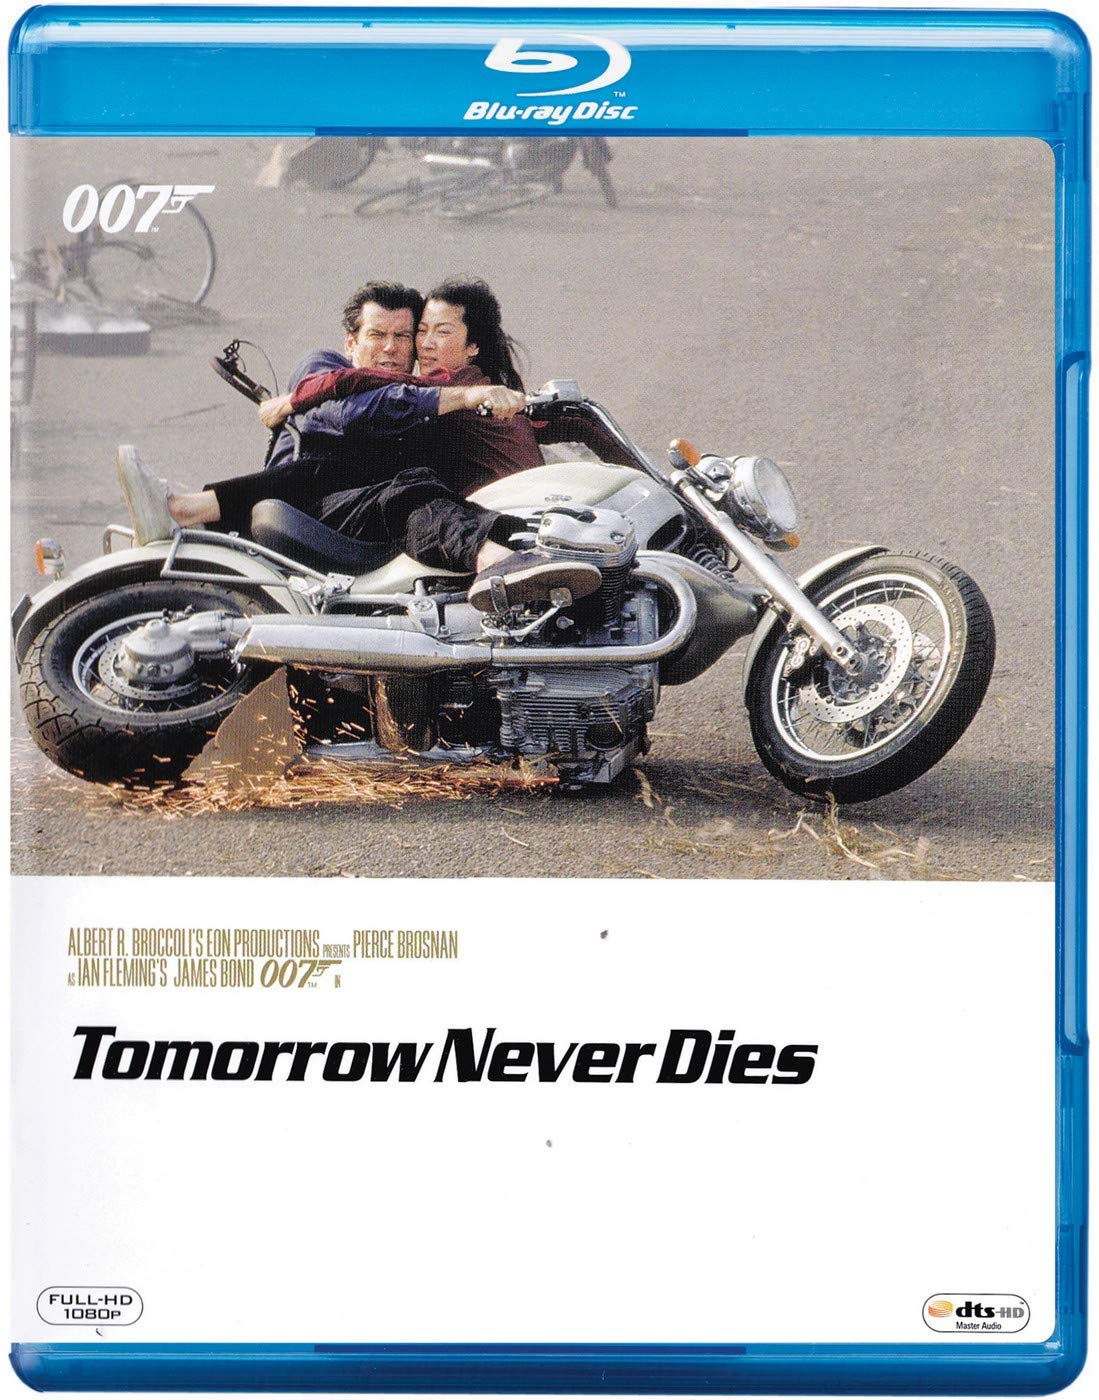 007-tomorrow-never-dies-pierce-brosnan-as-james-bond-movie-purchase